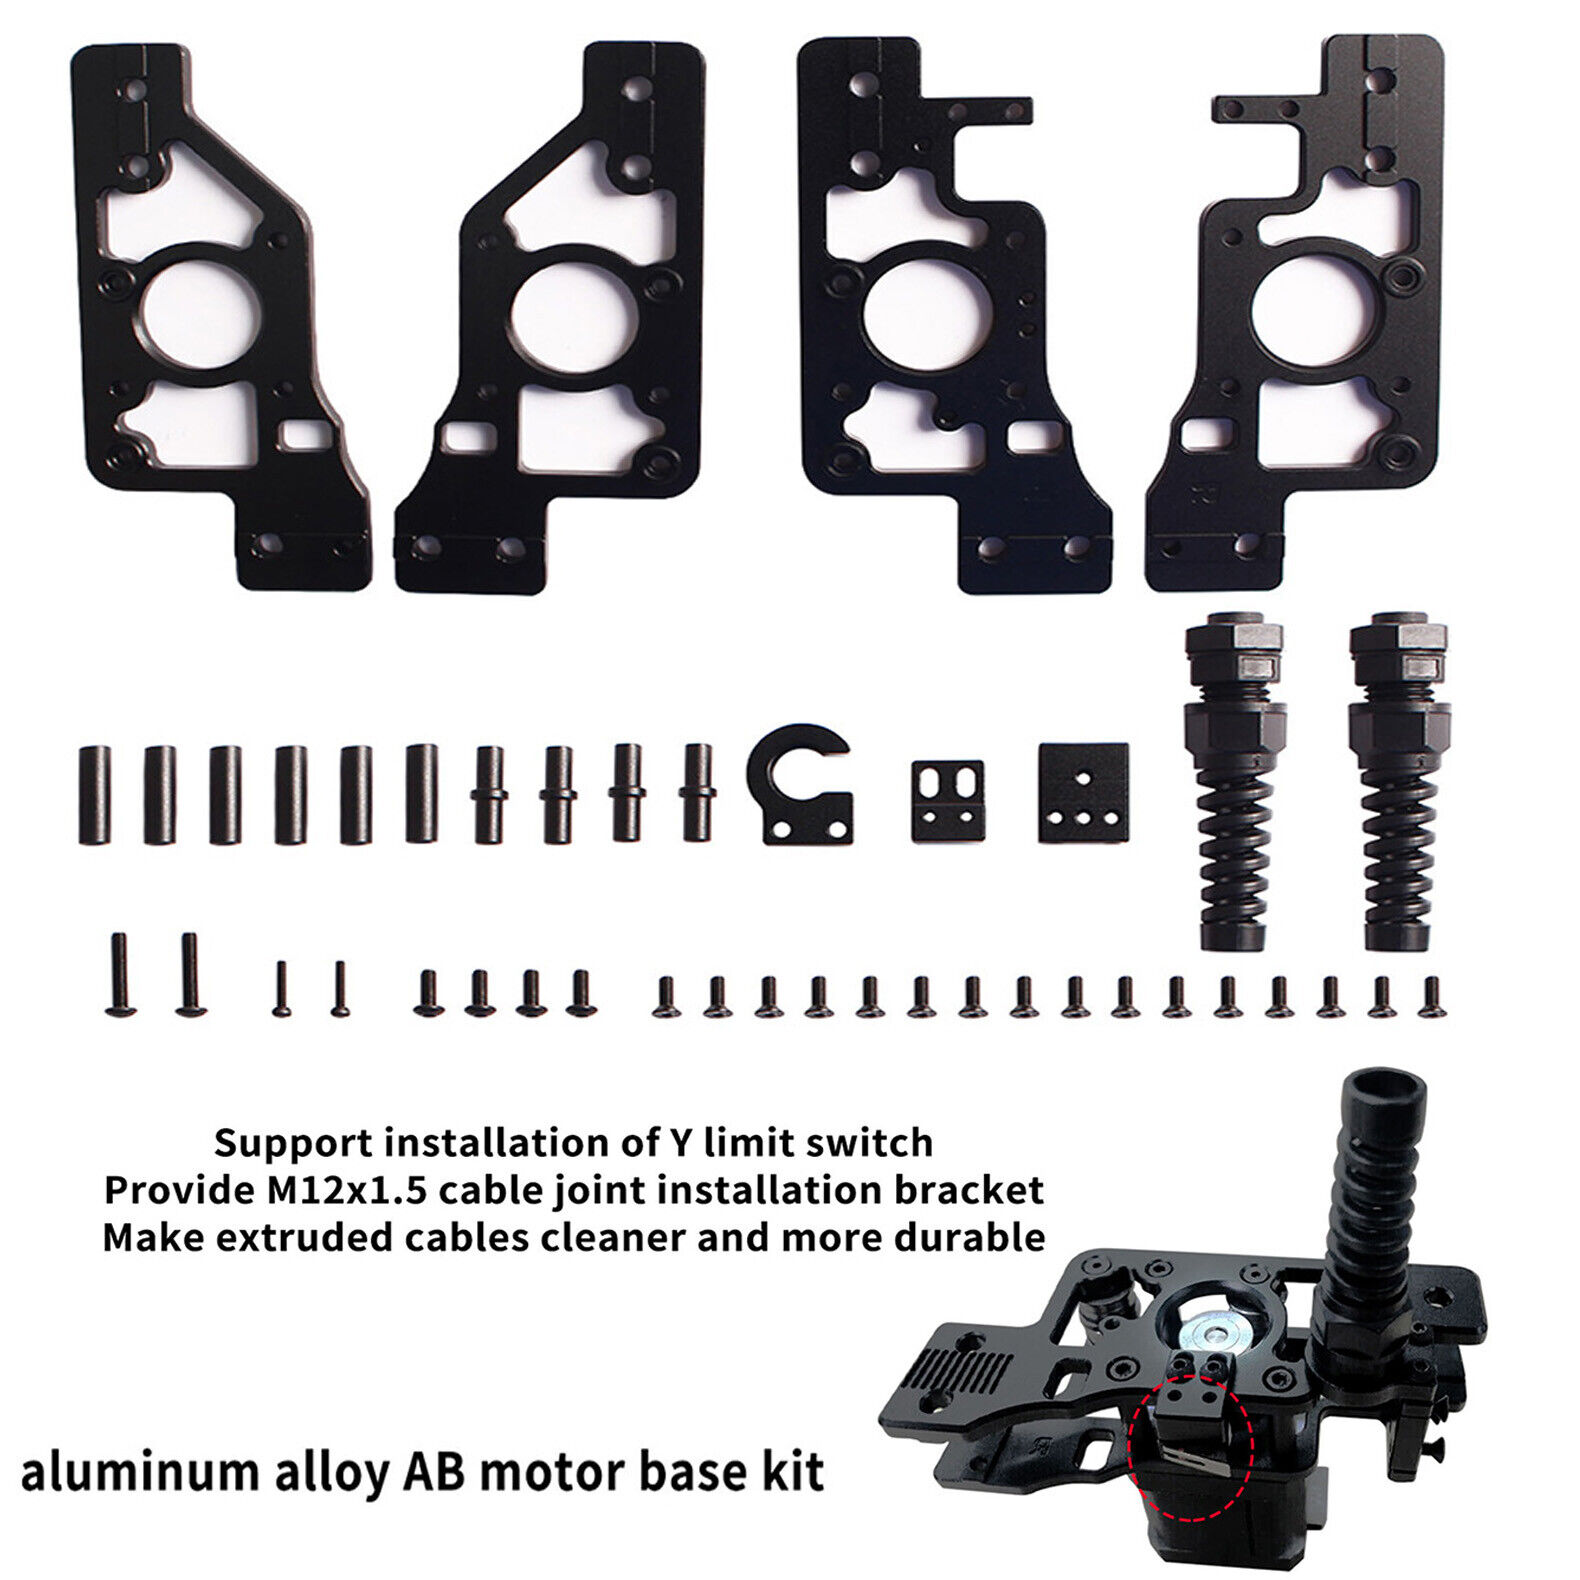 CNC Aluminum Alloy AB Motor Mount Set for Voron 2.4 R2 3D Printer Accessories